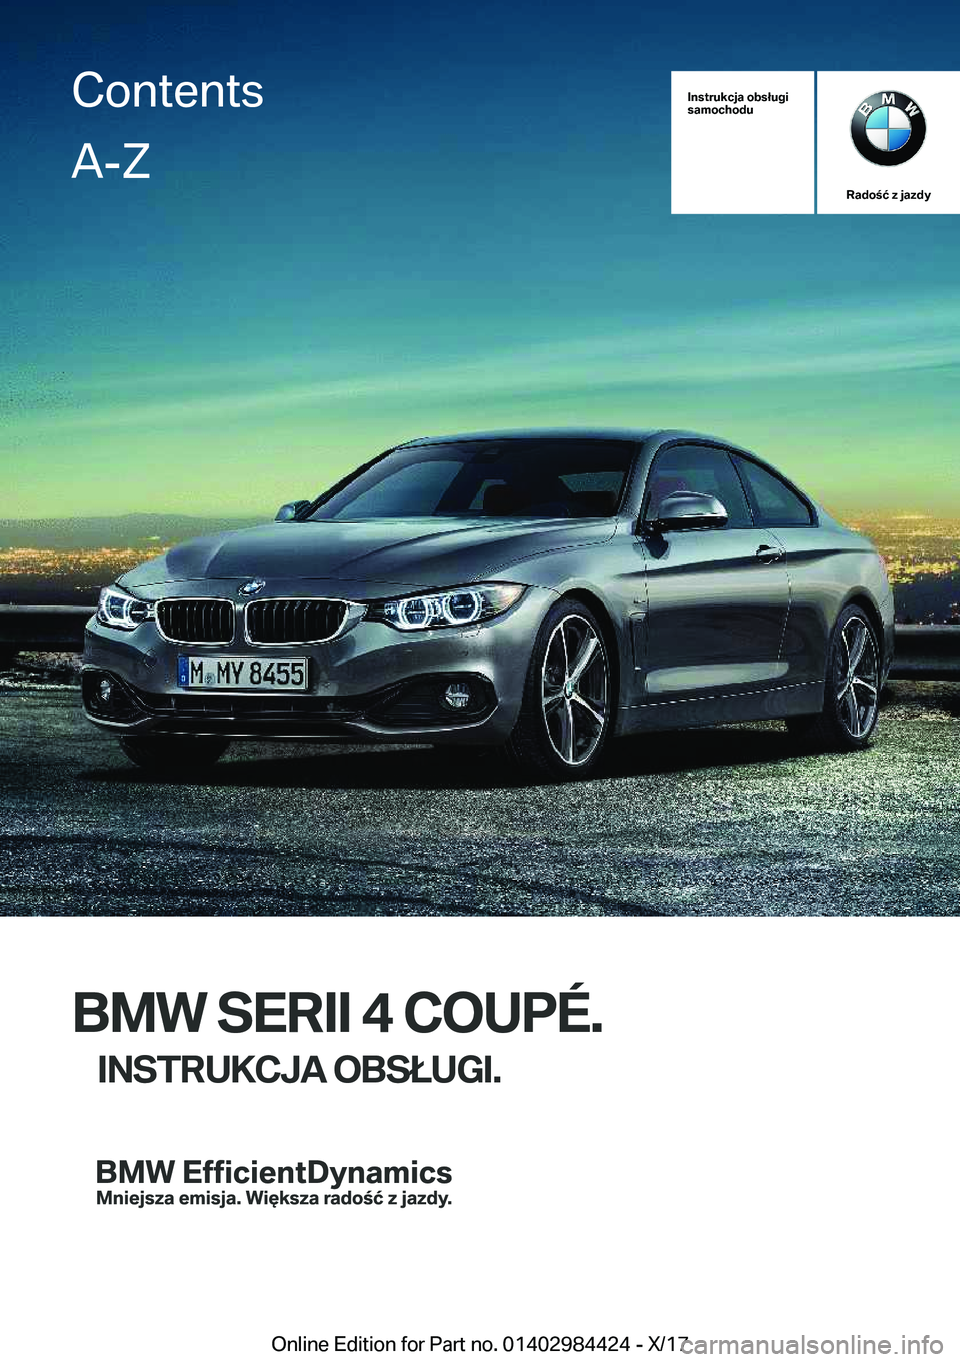 BMW 4 SERIES COUPE 2018  Instrukcja obsługi (in Polish) �I�n�s�t�r�u�k�c�j�a��o�b�s�ł�u�g�i
�s�a�m�o�c�h�o�d�u
�R�a�d�o�